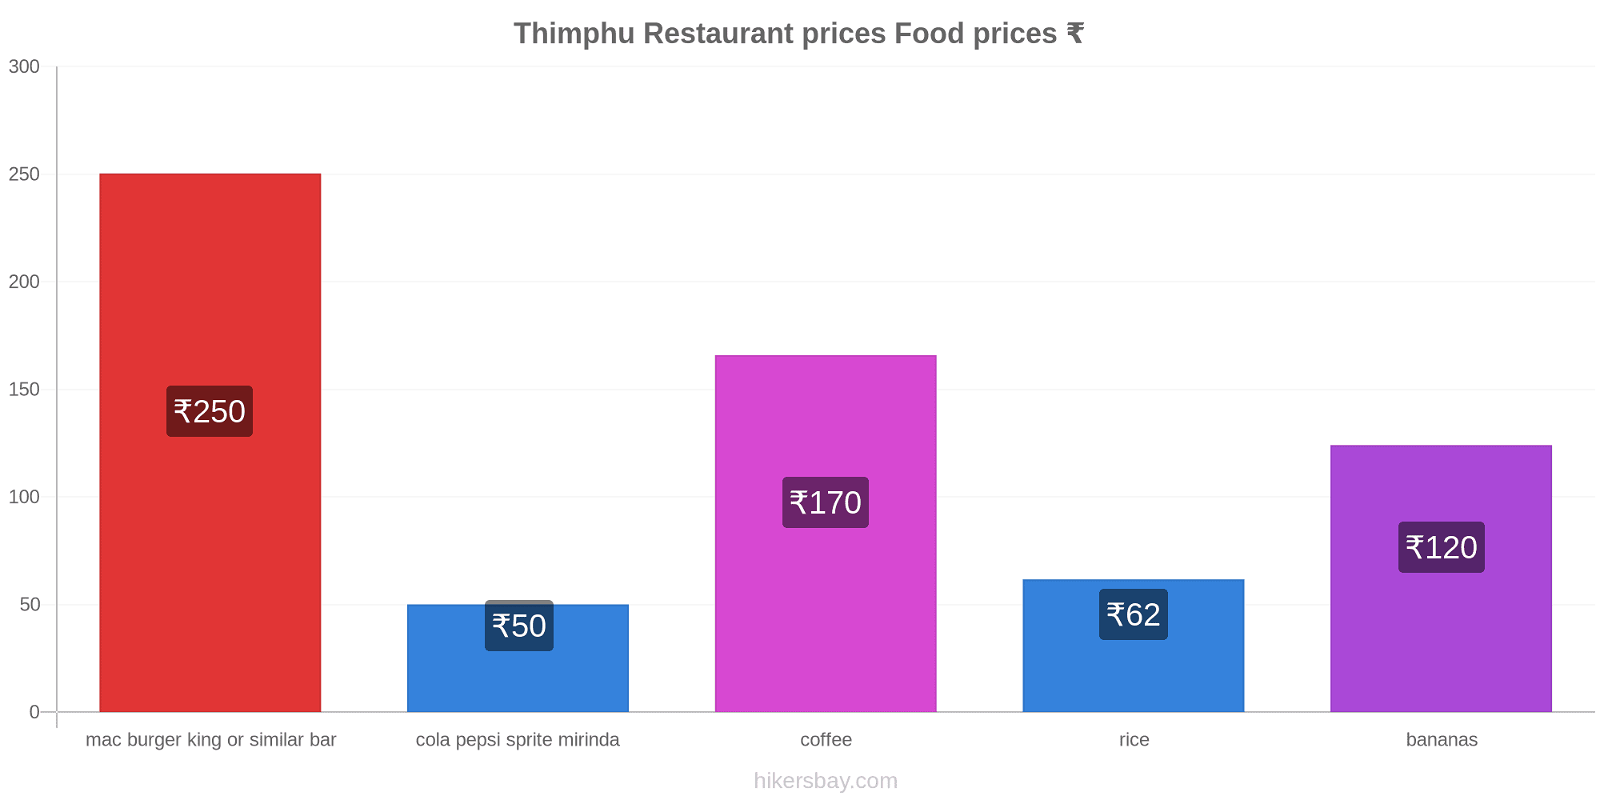 Thimphu price changes hikersbay.com